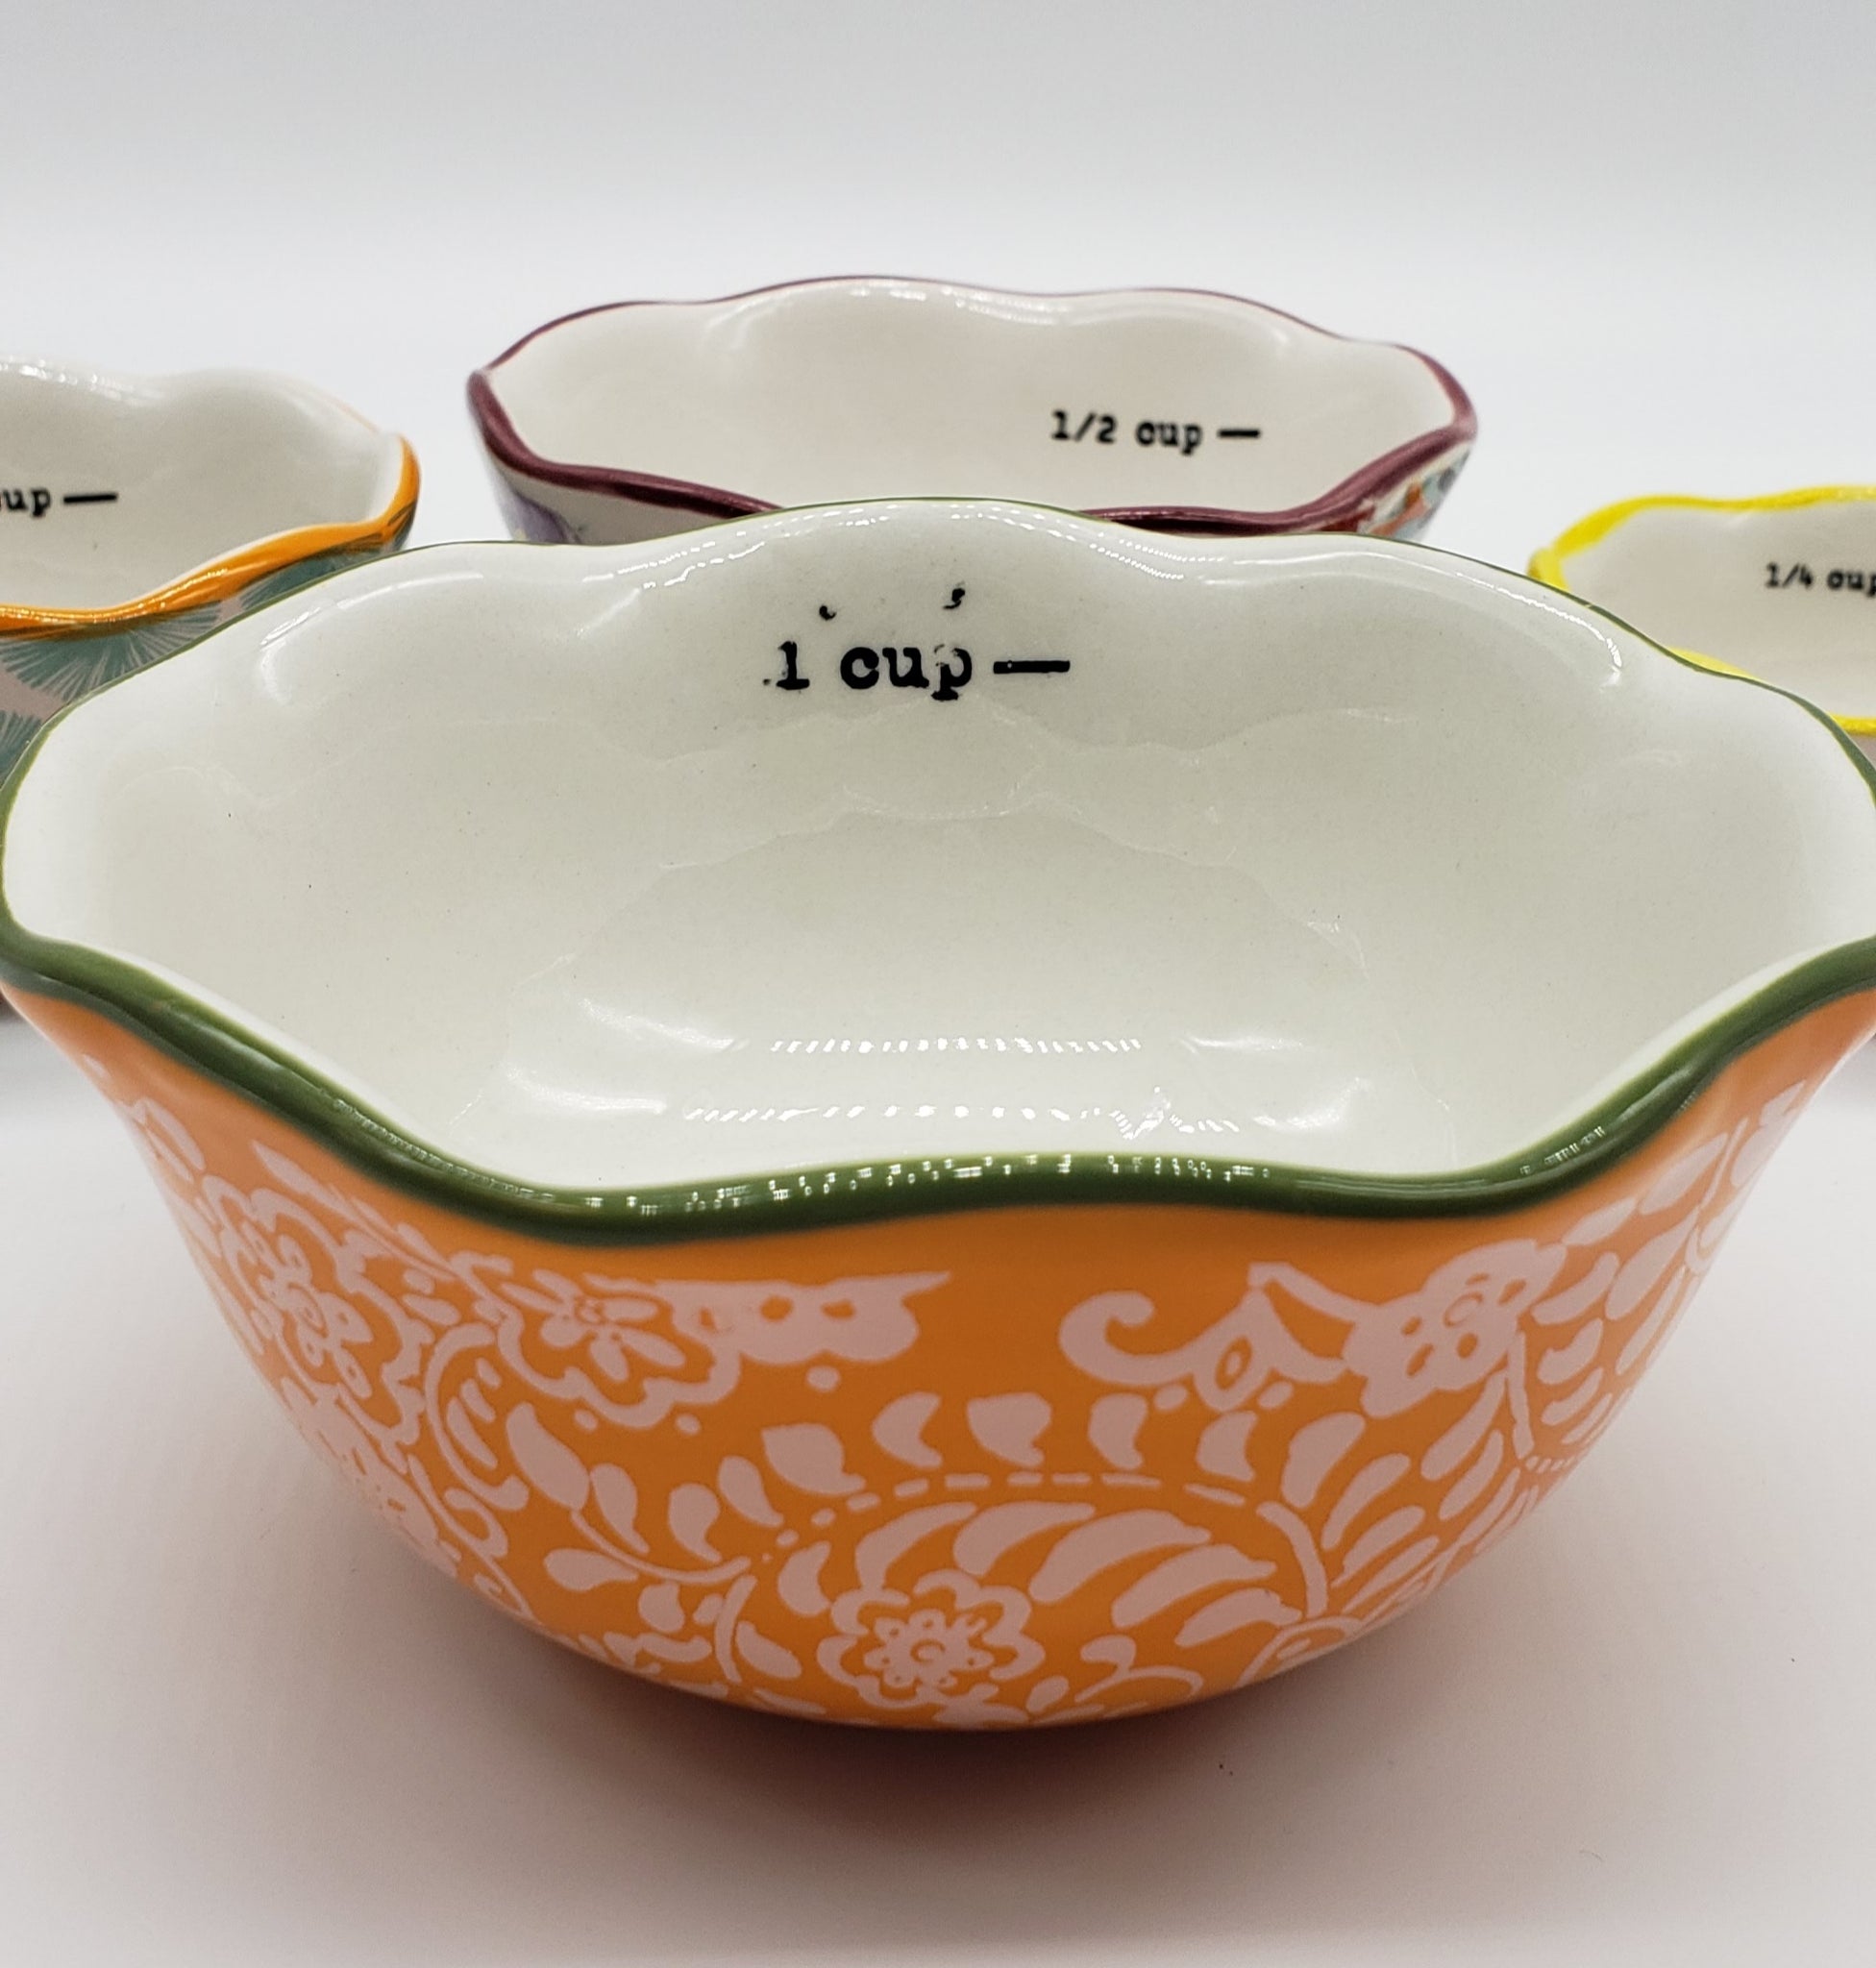 The Pioneer Woman Flea Market Ceramic Decorated Measuring Cup, 4-cup